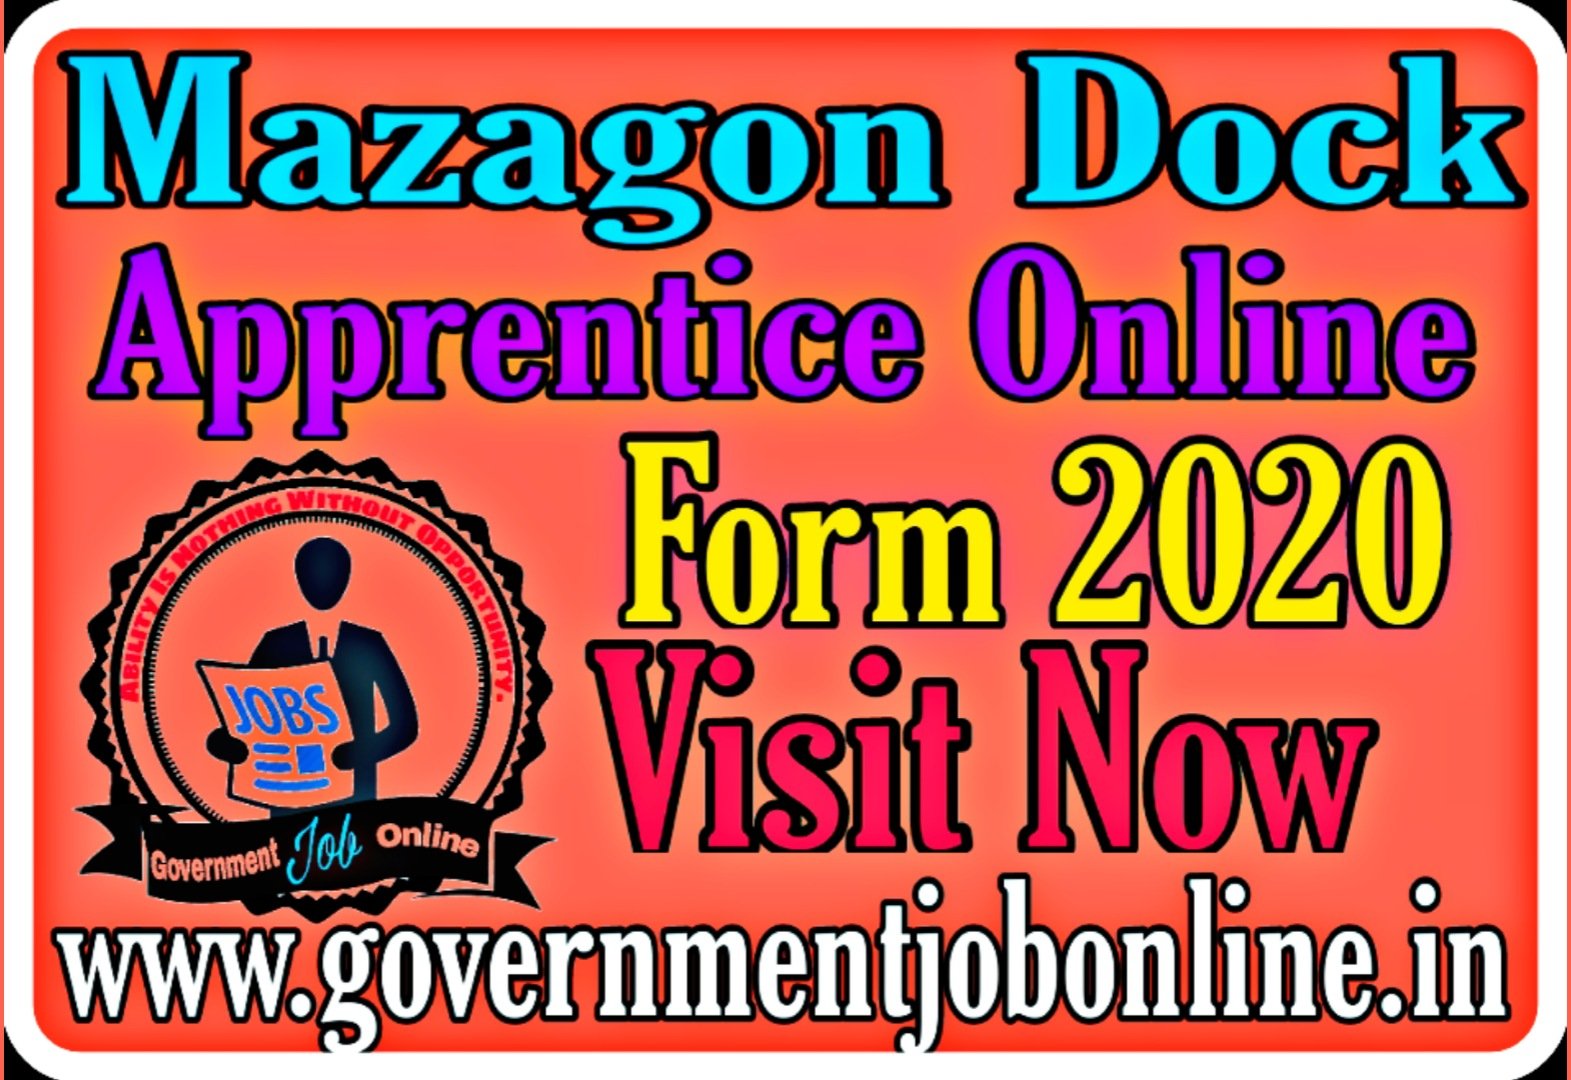 Mazagon Dock Apprentice Online Form 2020